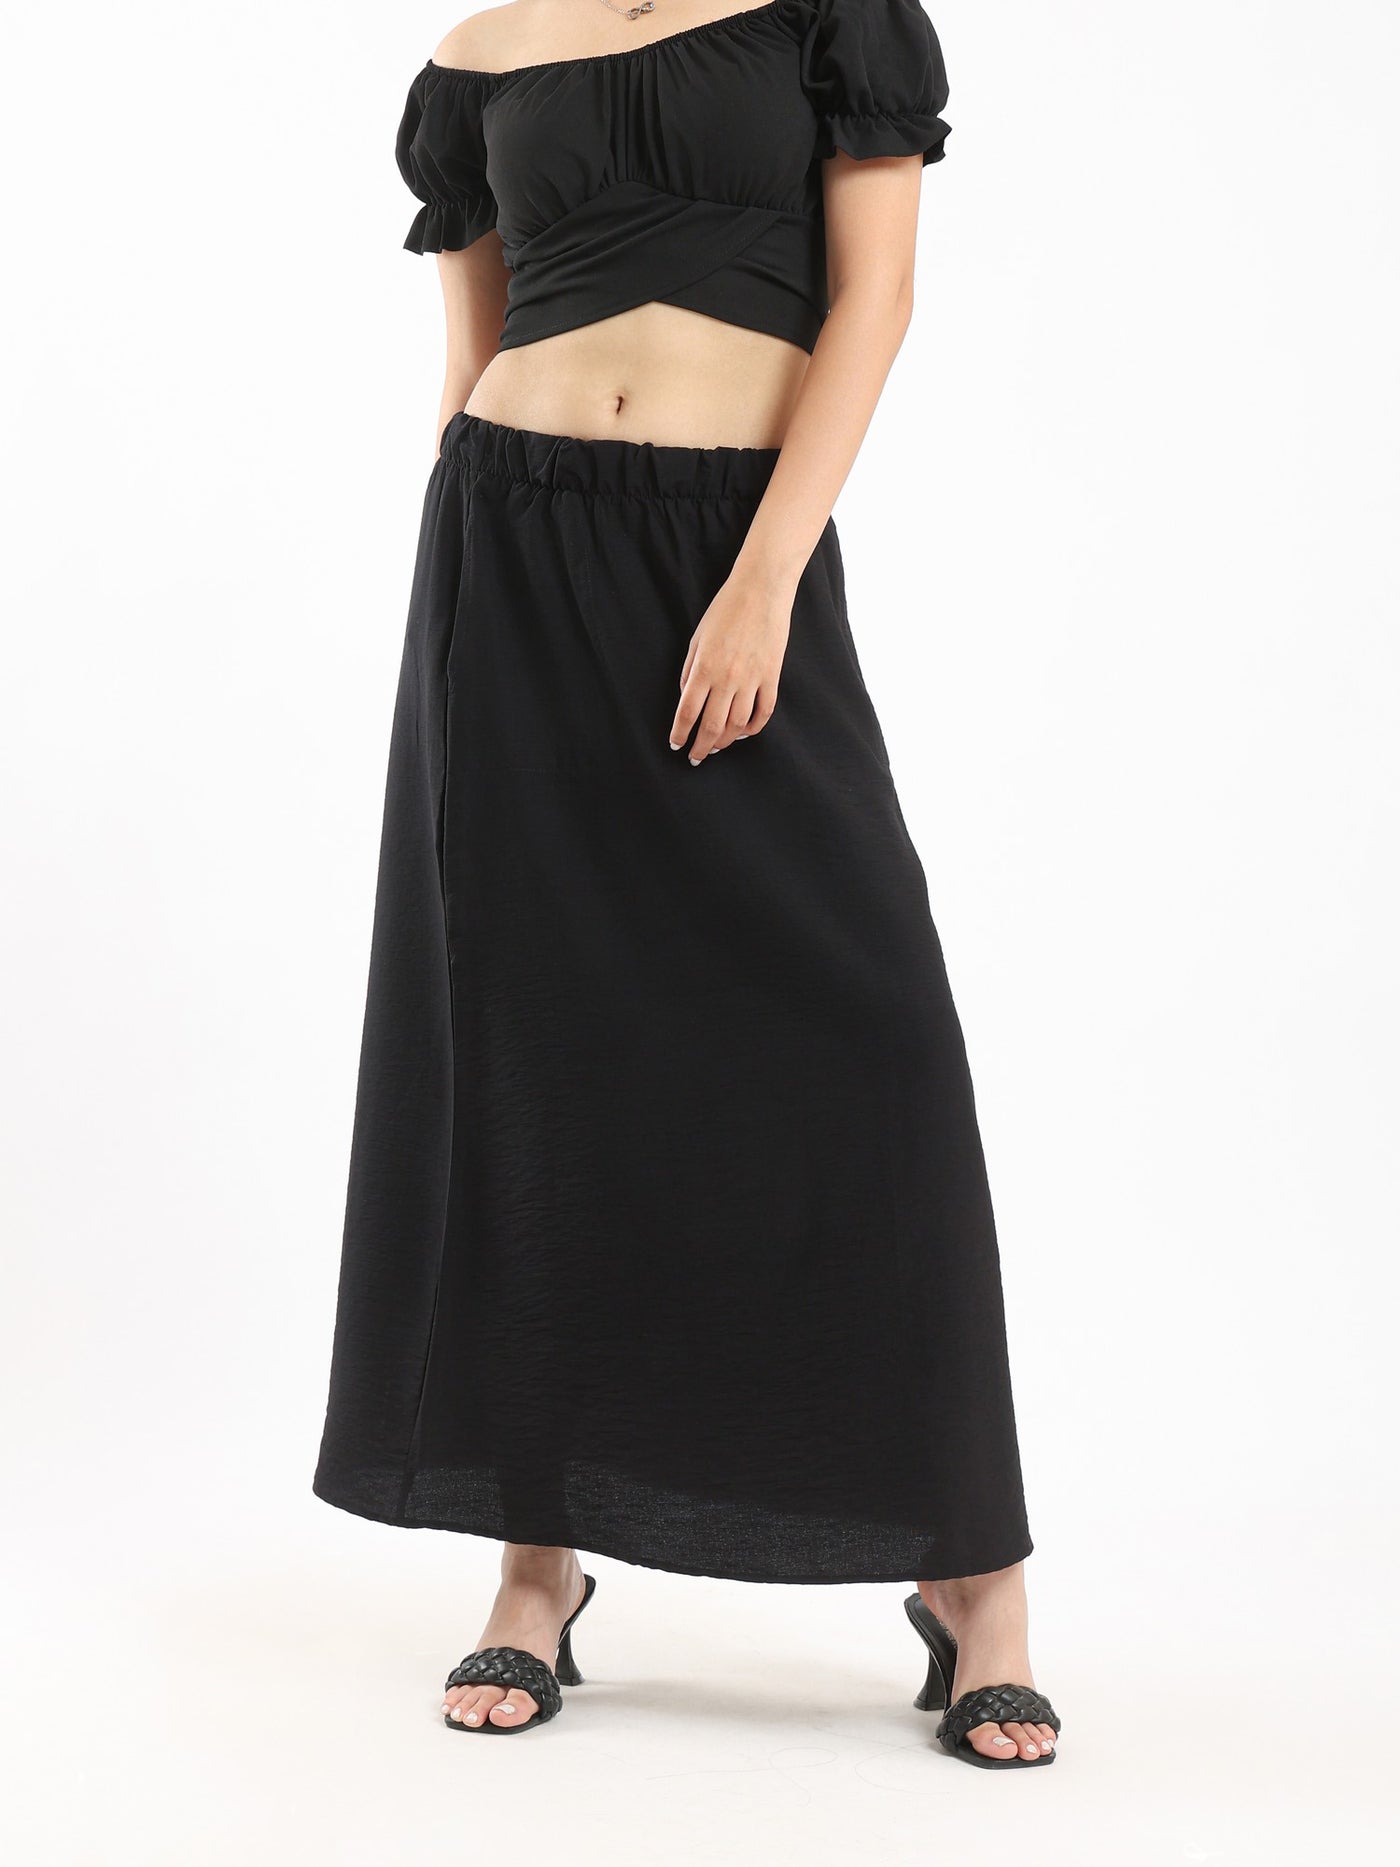 Skirt - Elasticated Waist - Plain